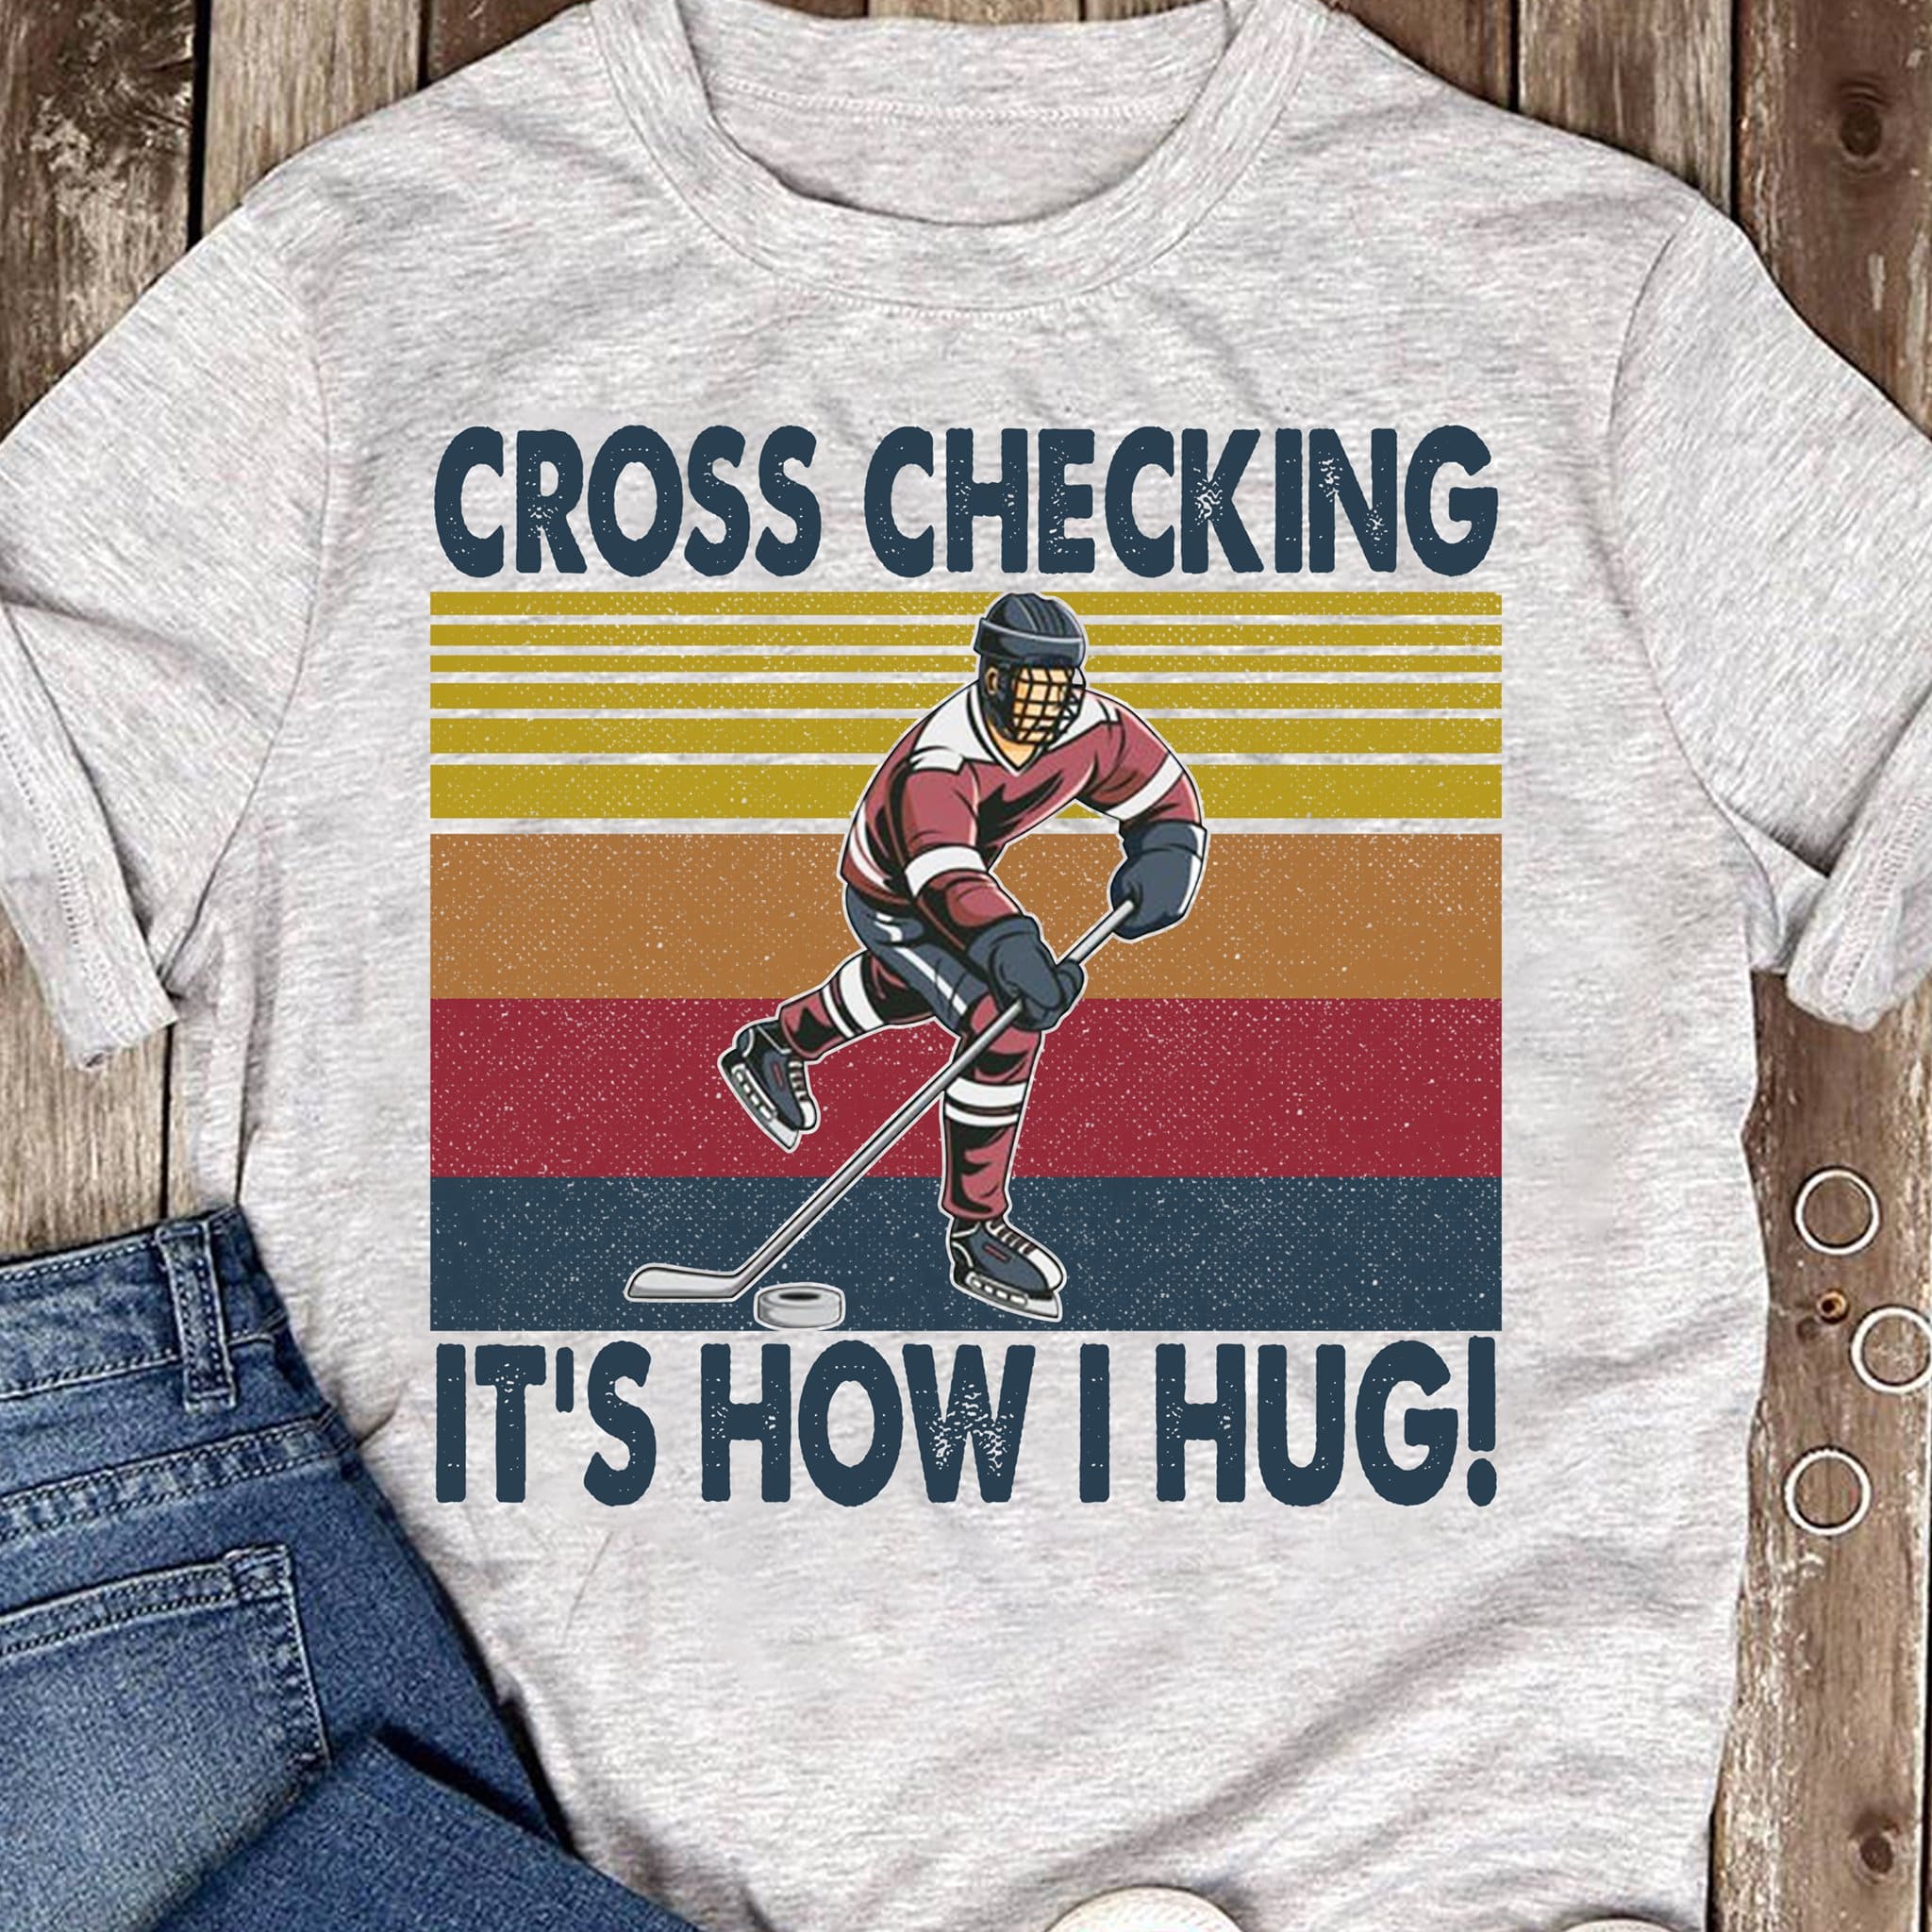 Cross checking - Hockey player T-shirt, love playing hockey